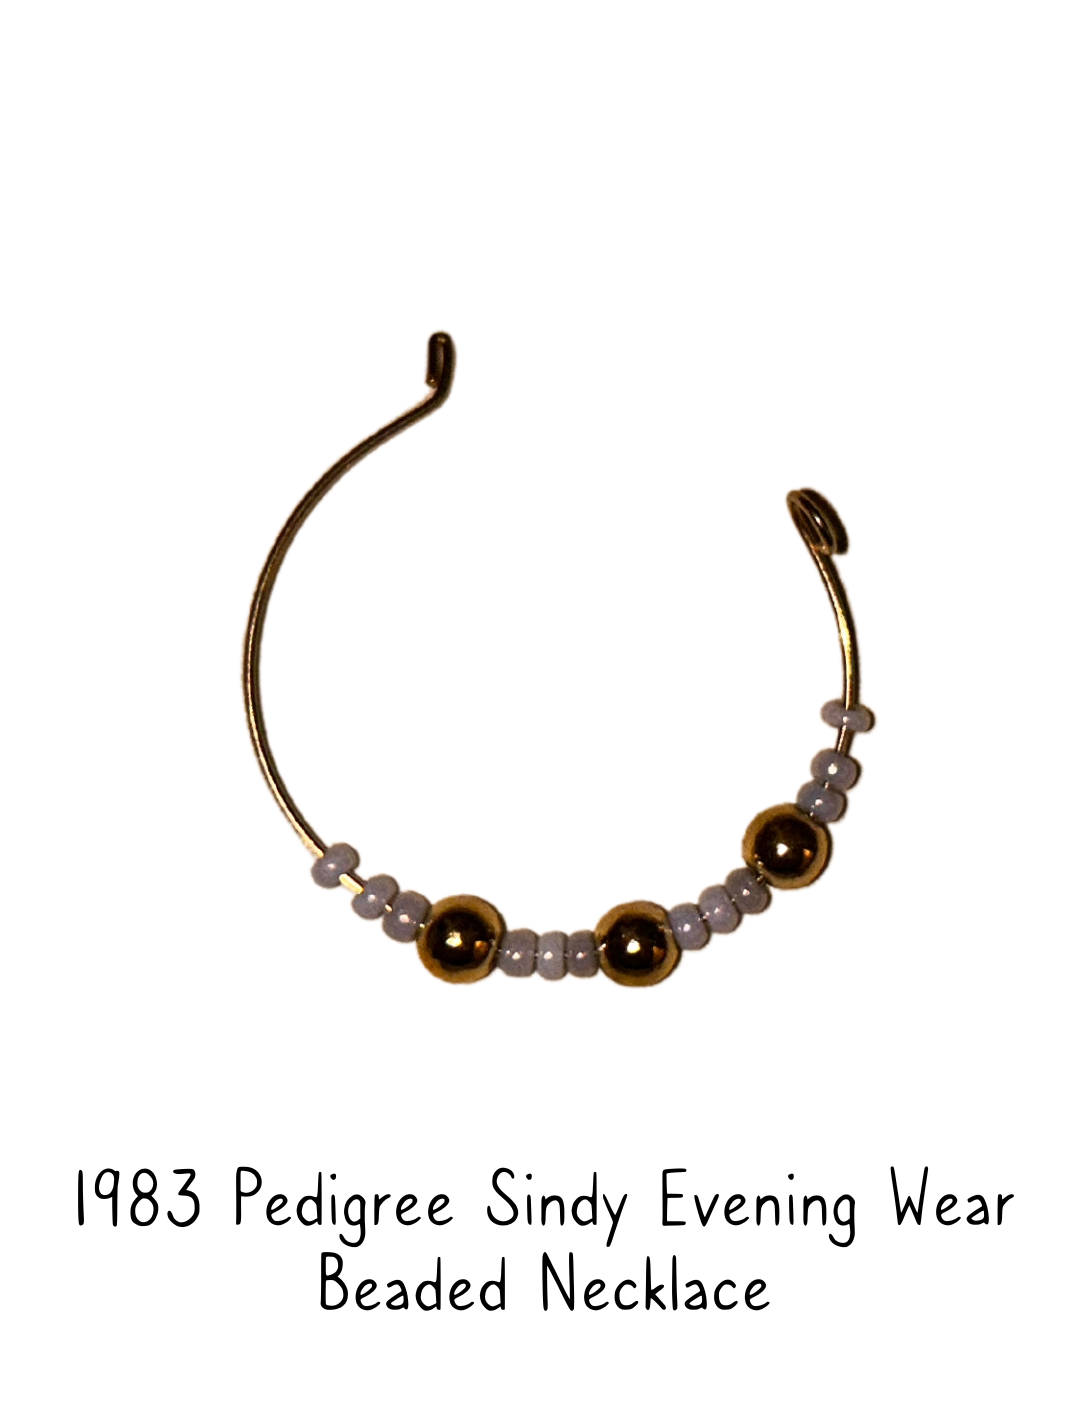 1983 Pedigree Sindy Evening Wear Beaded Necklace